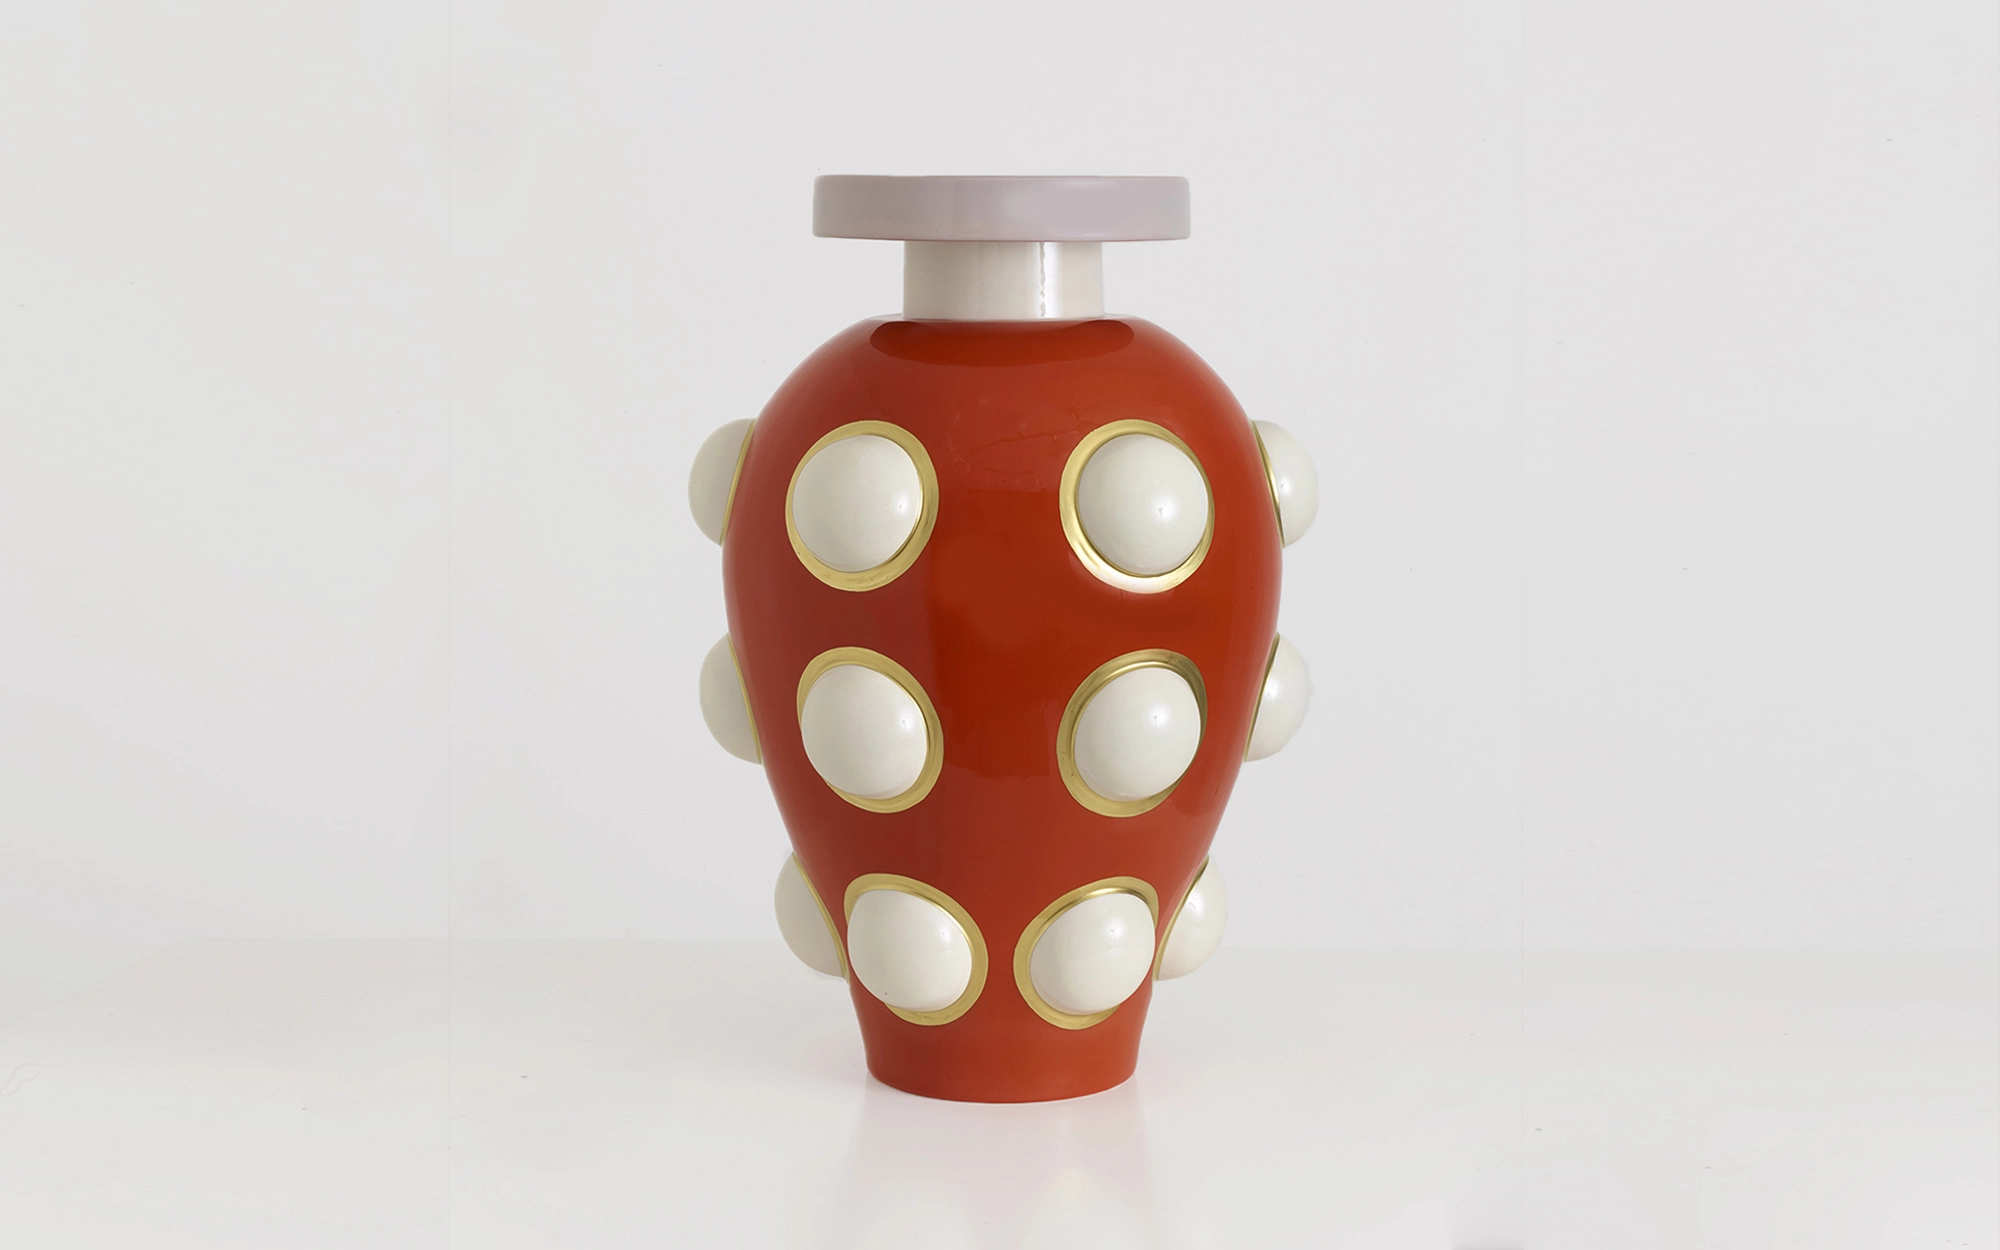 Cabochon Vase Ancient Greece - Olivier Gagnère - Design Miami / Basel 2019.